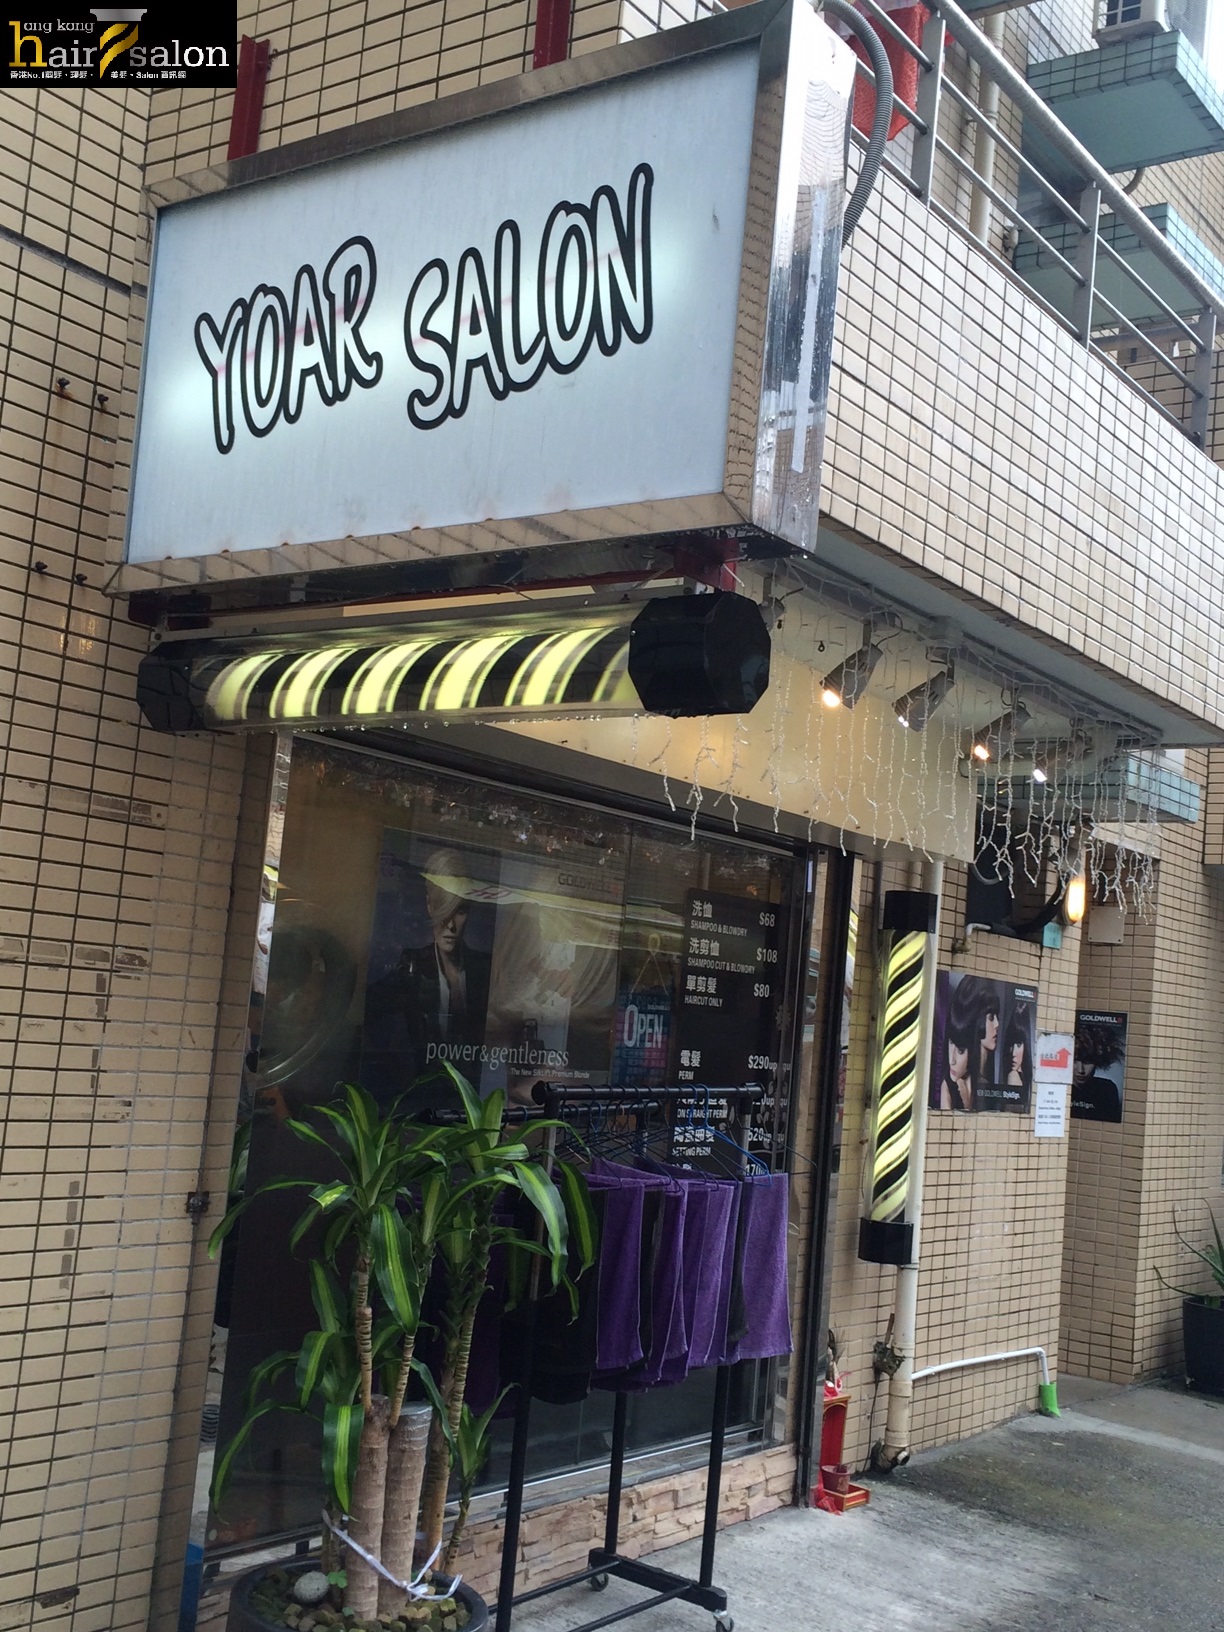 Hair Colouring: Yoar Salon (馬灣)